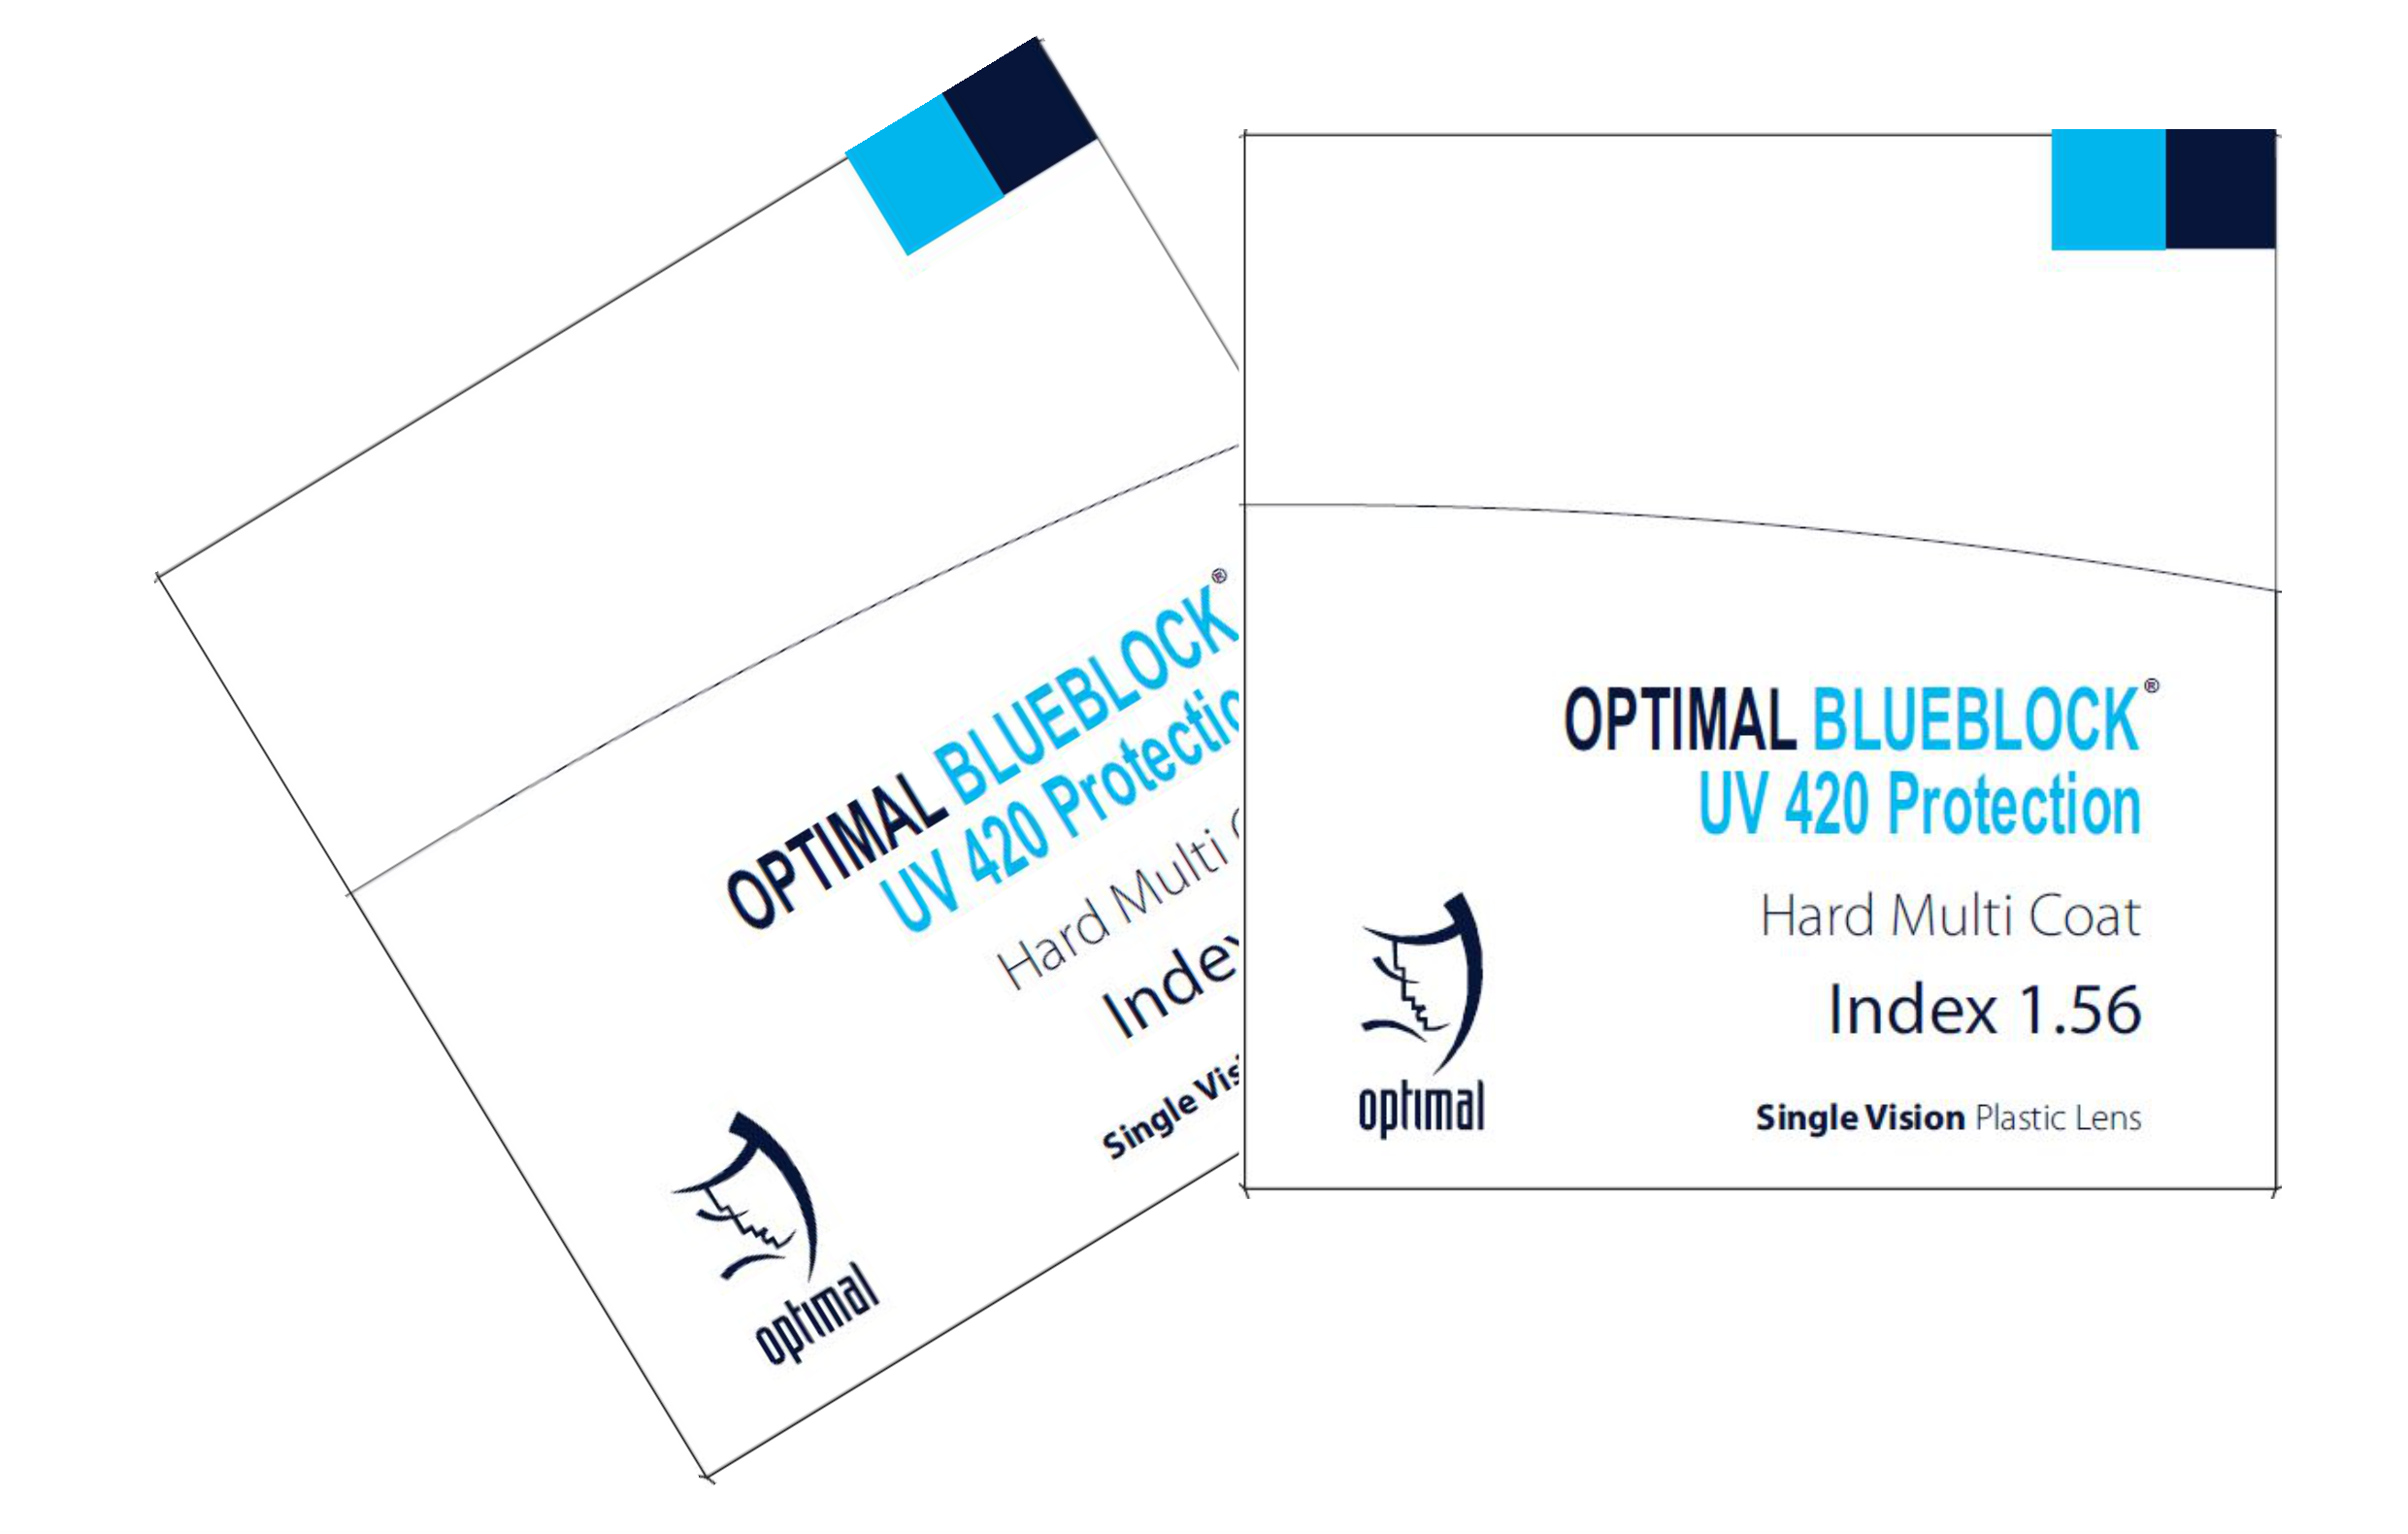 Optimal Blueblock UV420 Protection